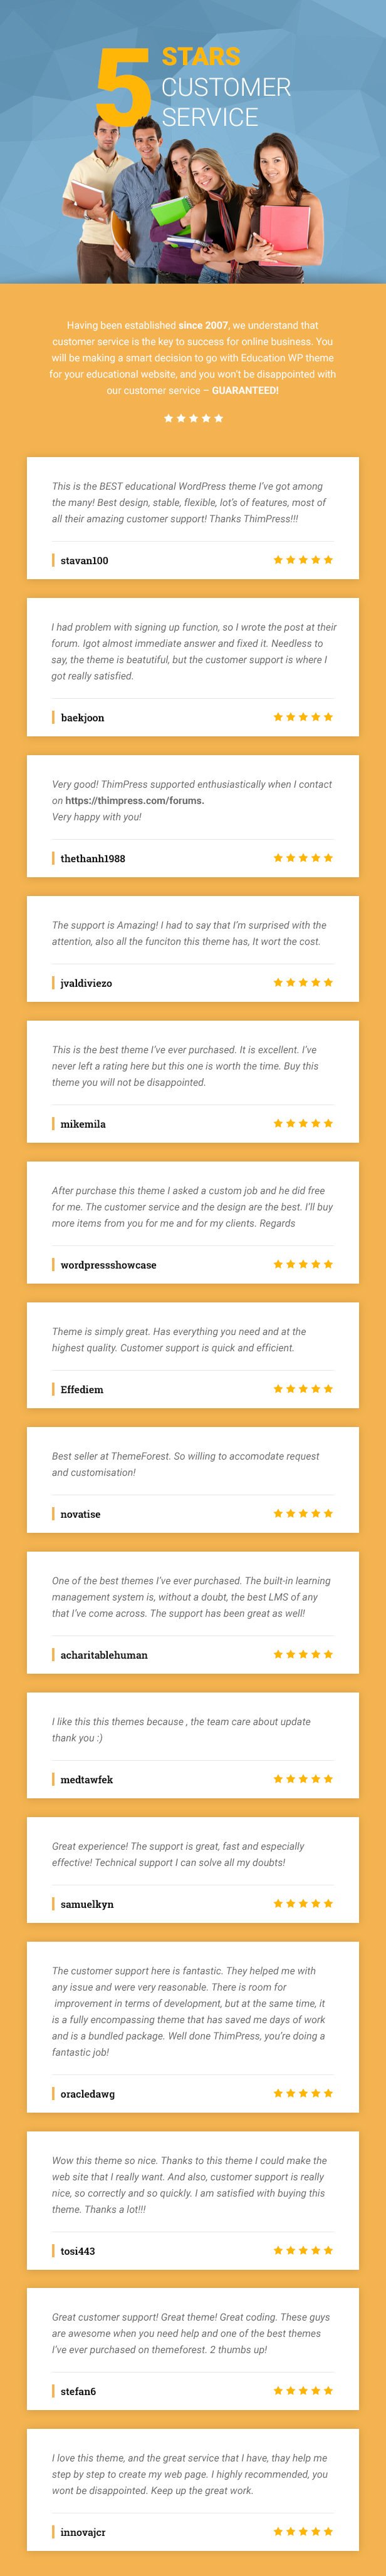 Education WordPress theme - 5 stars customers review